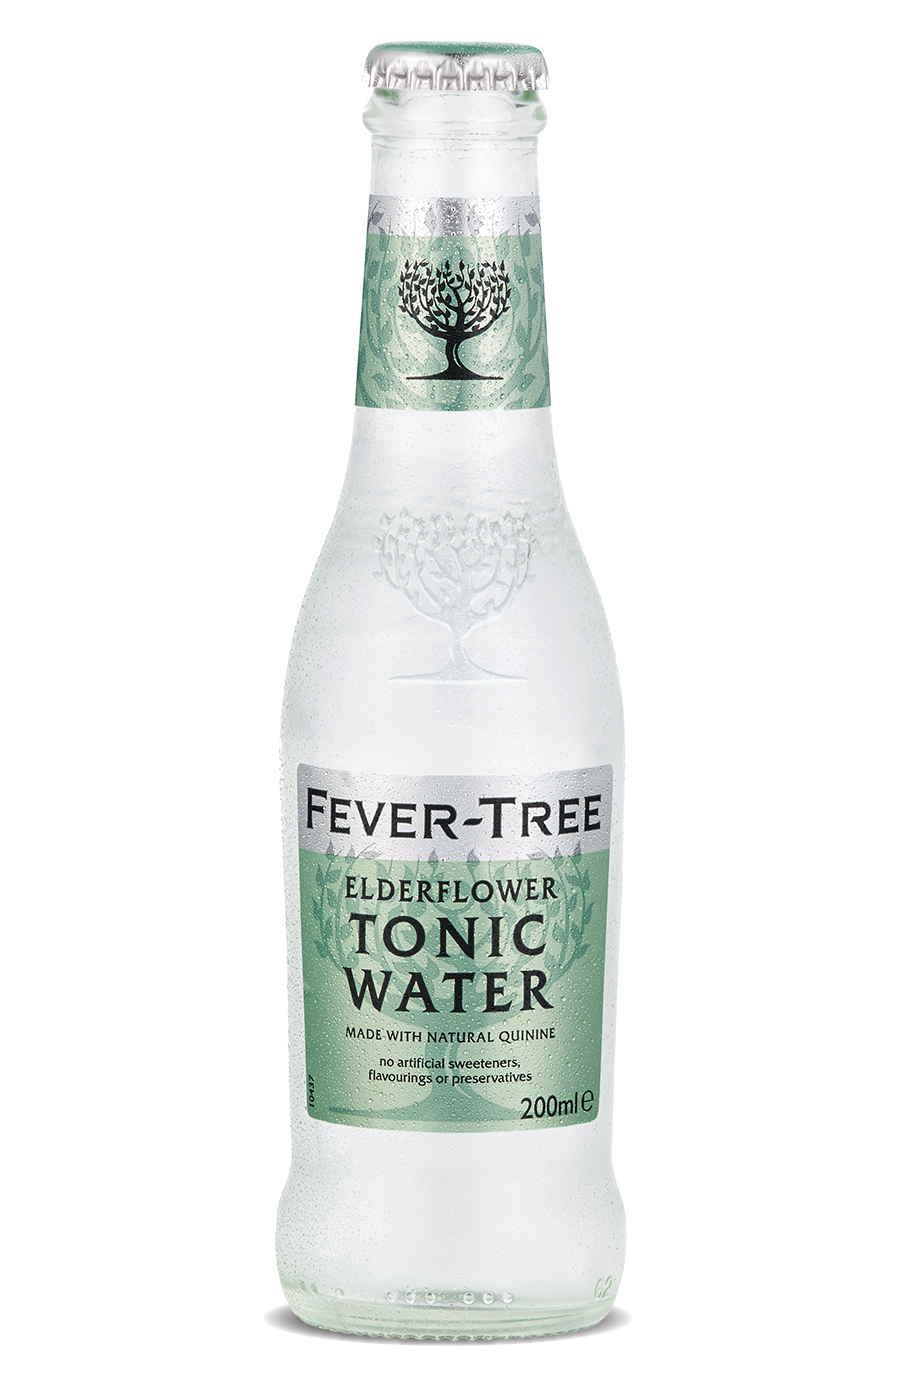 Fever-Tree Premium Elderflower Tonic Water 4x200ml